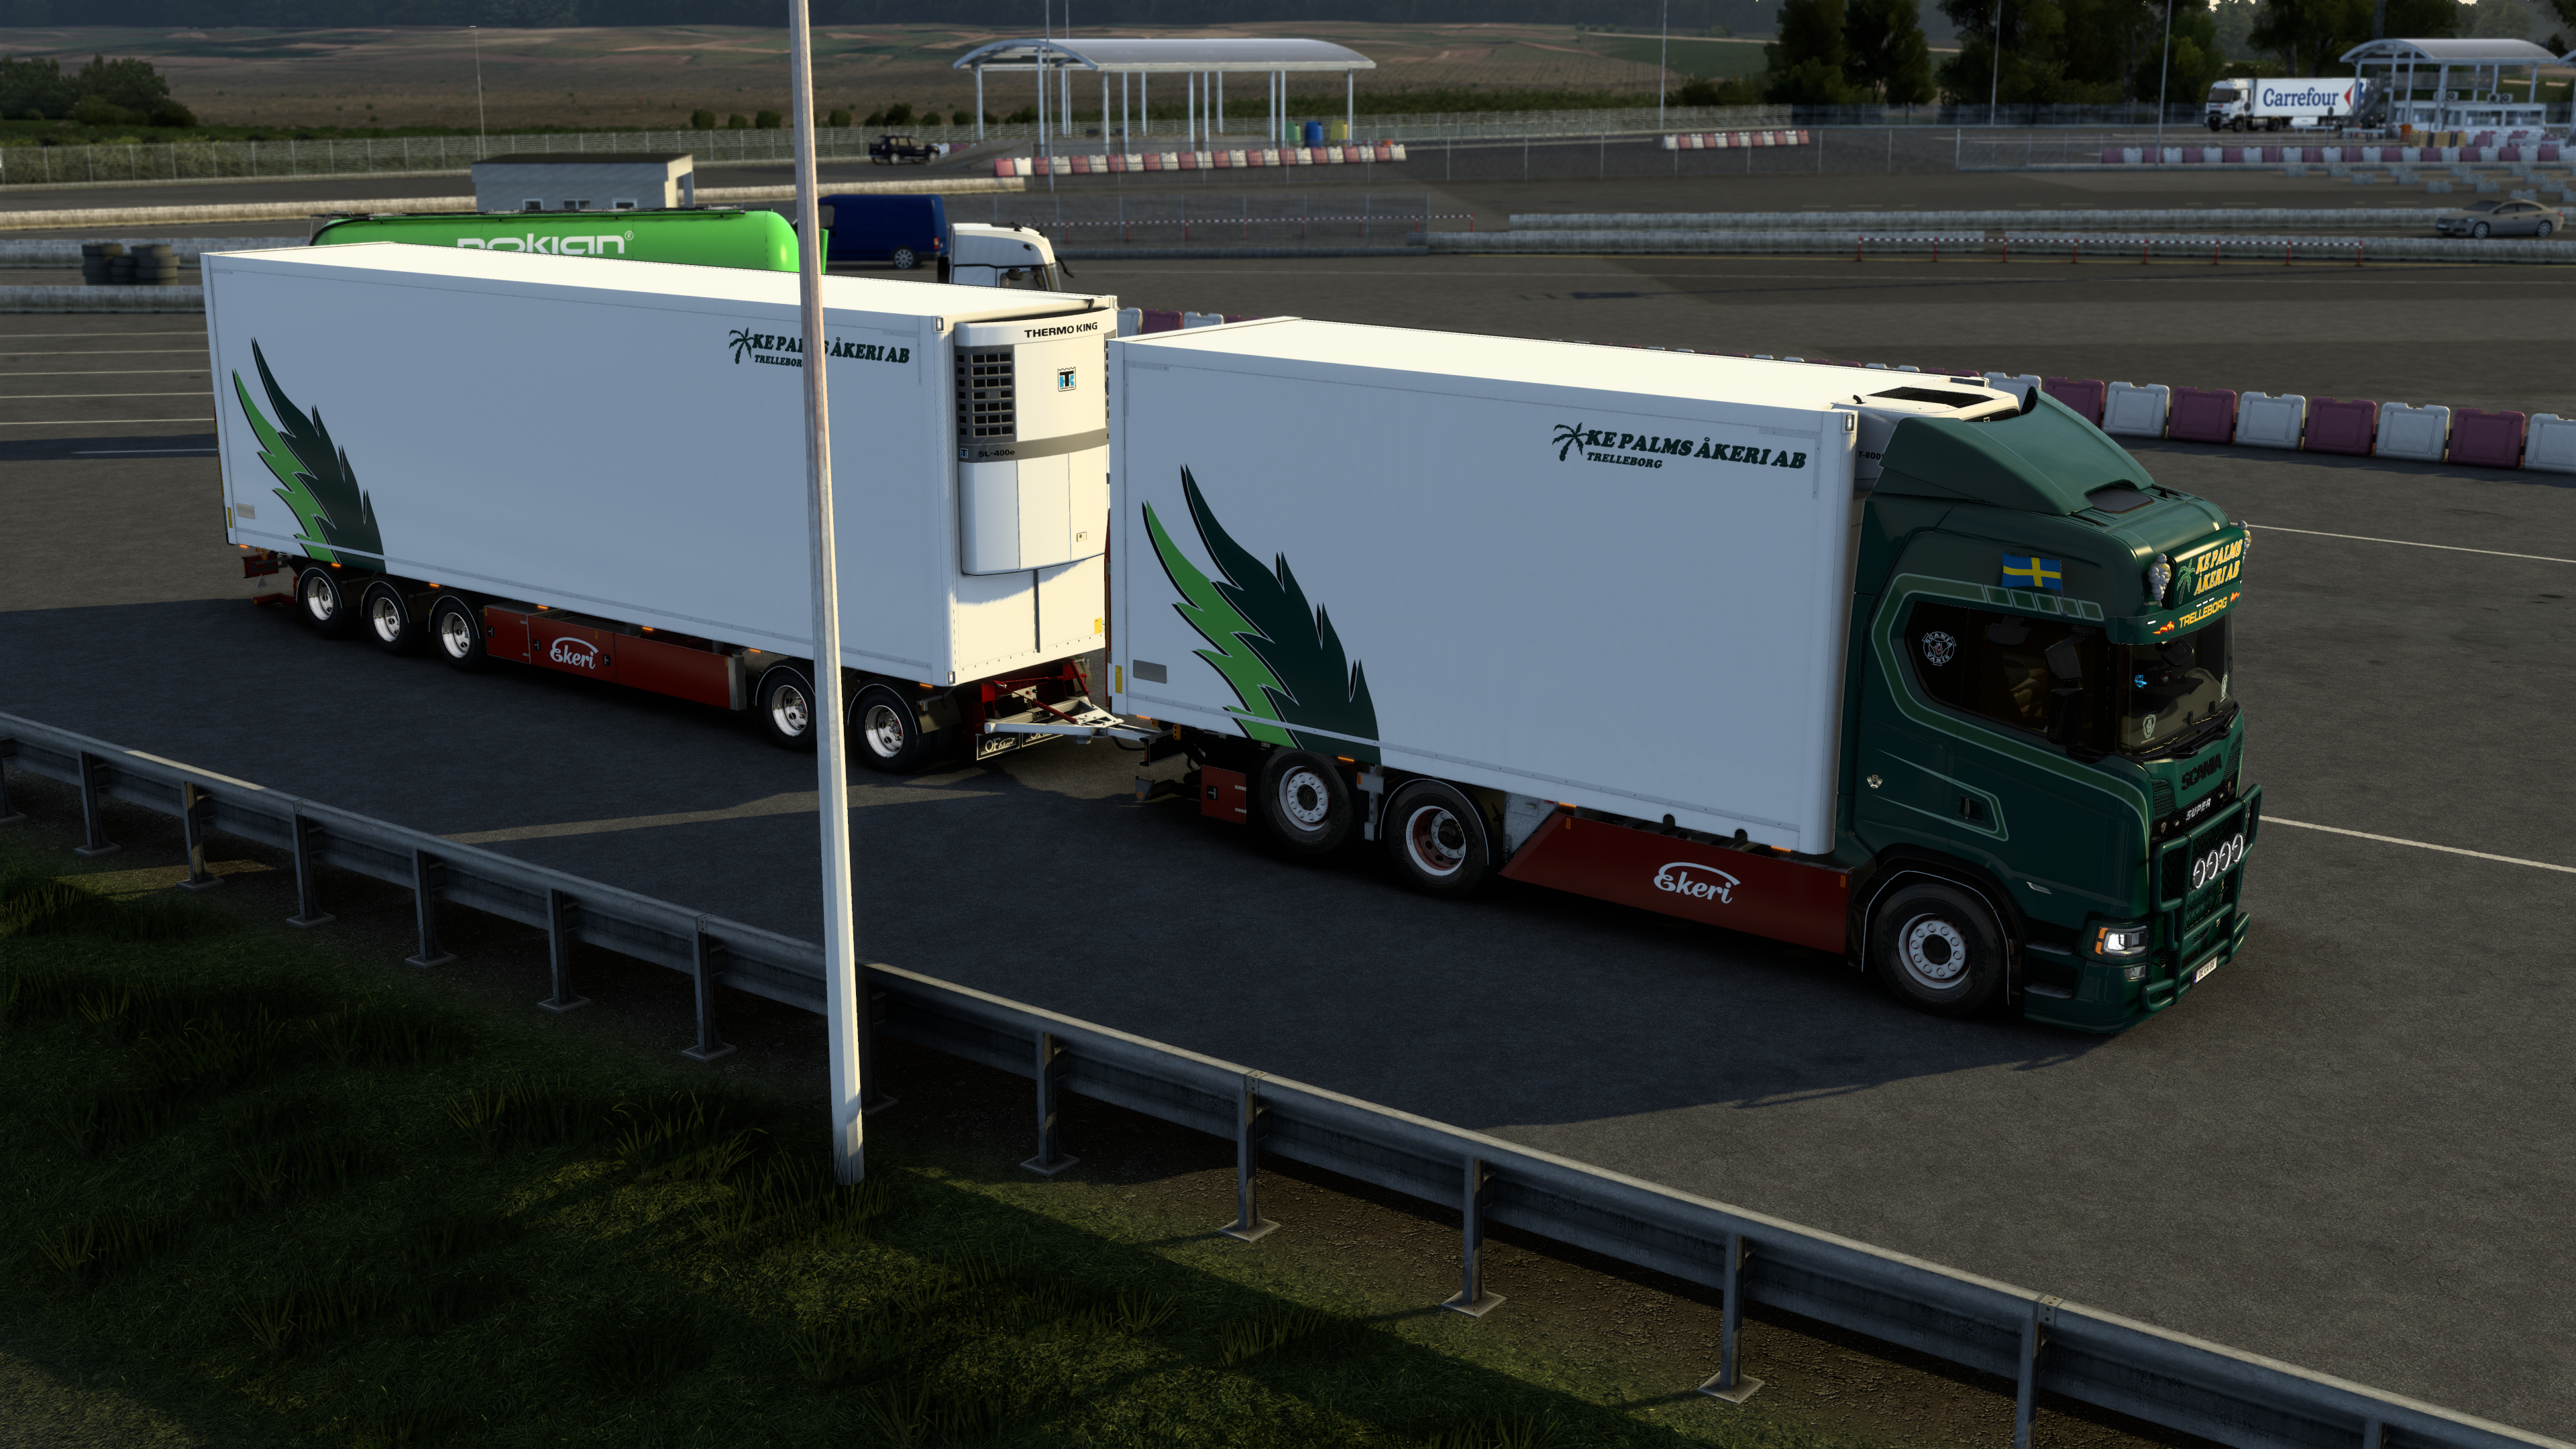 General 3840x2160 Scania Euro Truck Simulator 2 truck video games CGI vehicle side view road